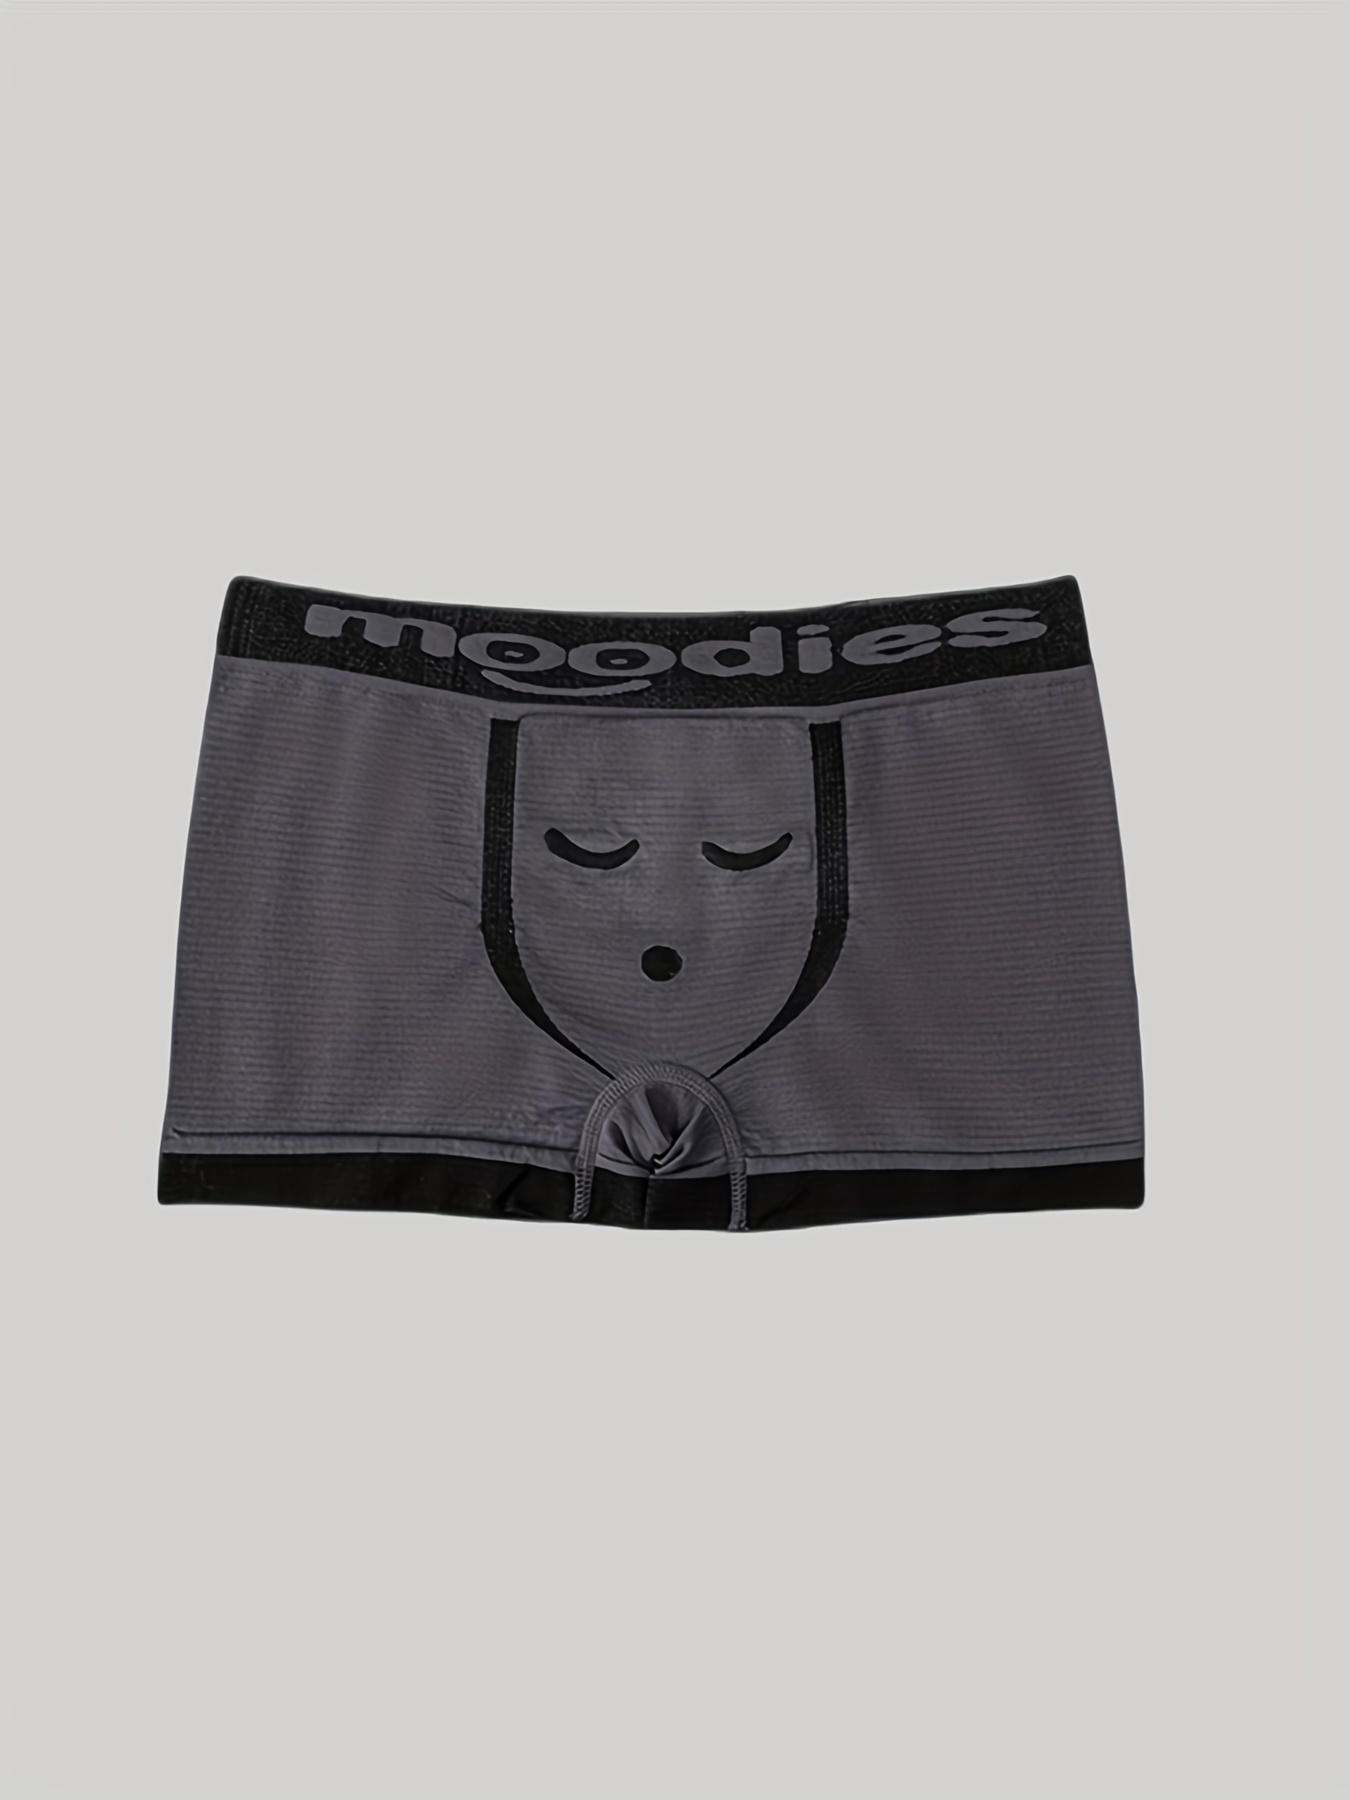 1 3pcs mens emotional face breathable boxer brief soft comfortable underwear for man details 14